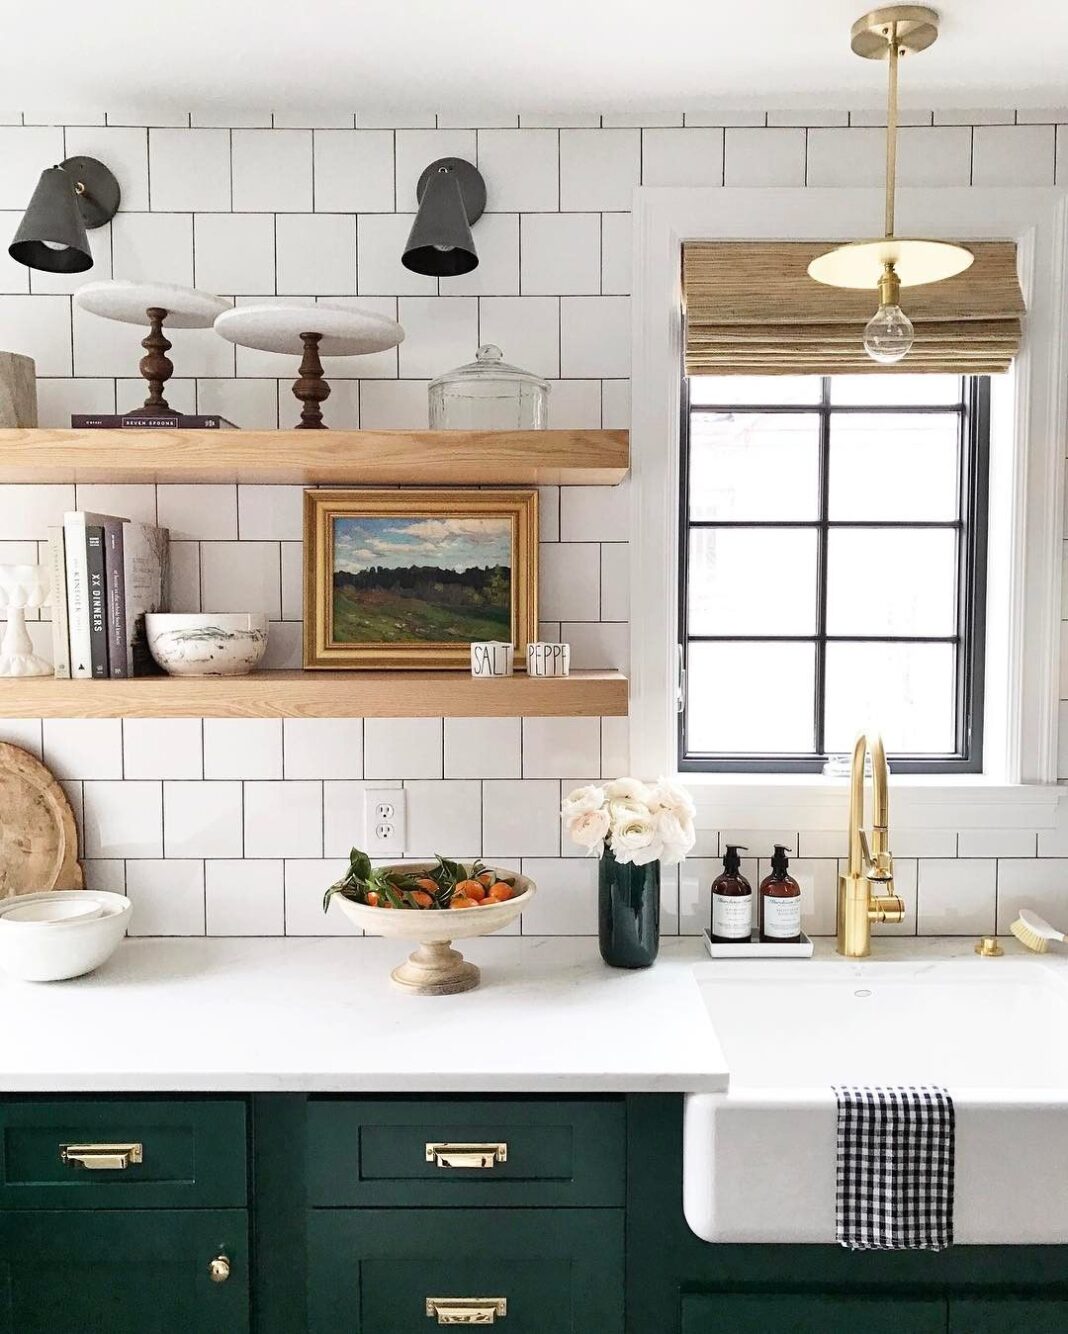 10 Best Small Kitchen Decorating Ideas